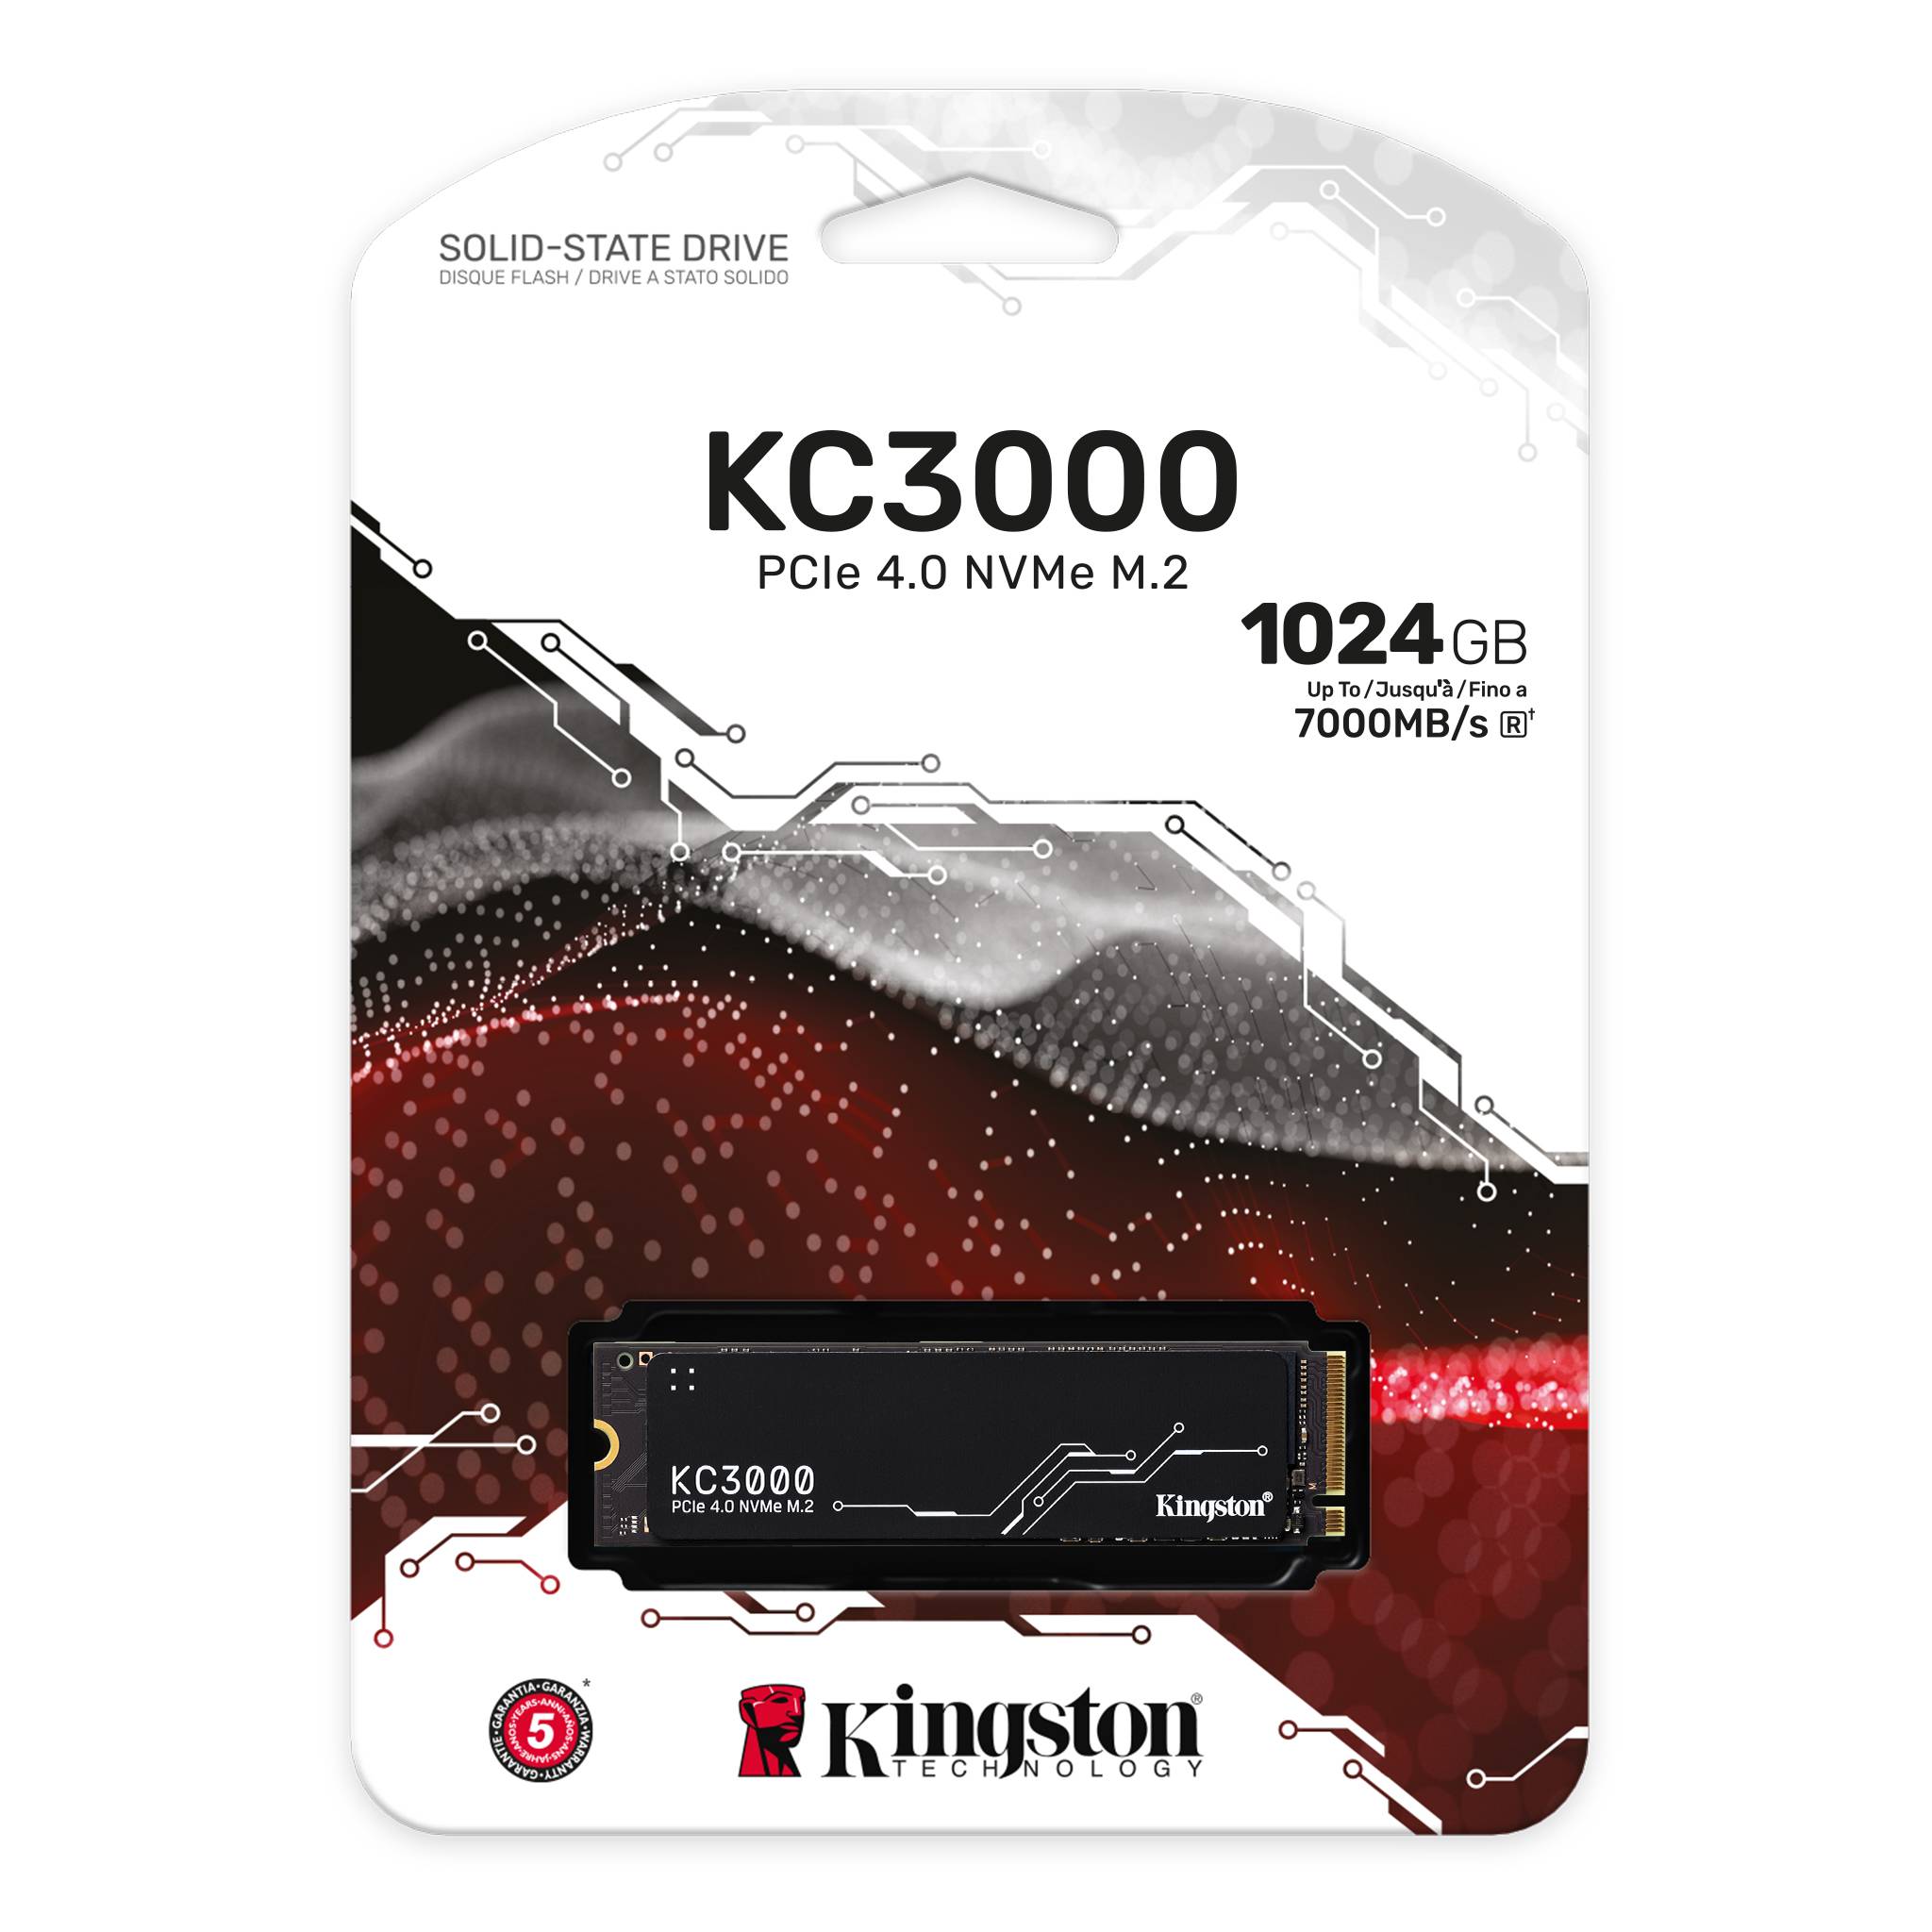 KC3000 PCIe 4.0 NVMe Alto rendimiento para computadoras de escritorio y portátiles - Technology